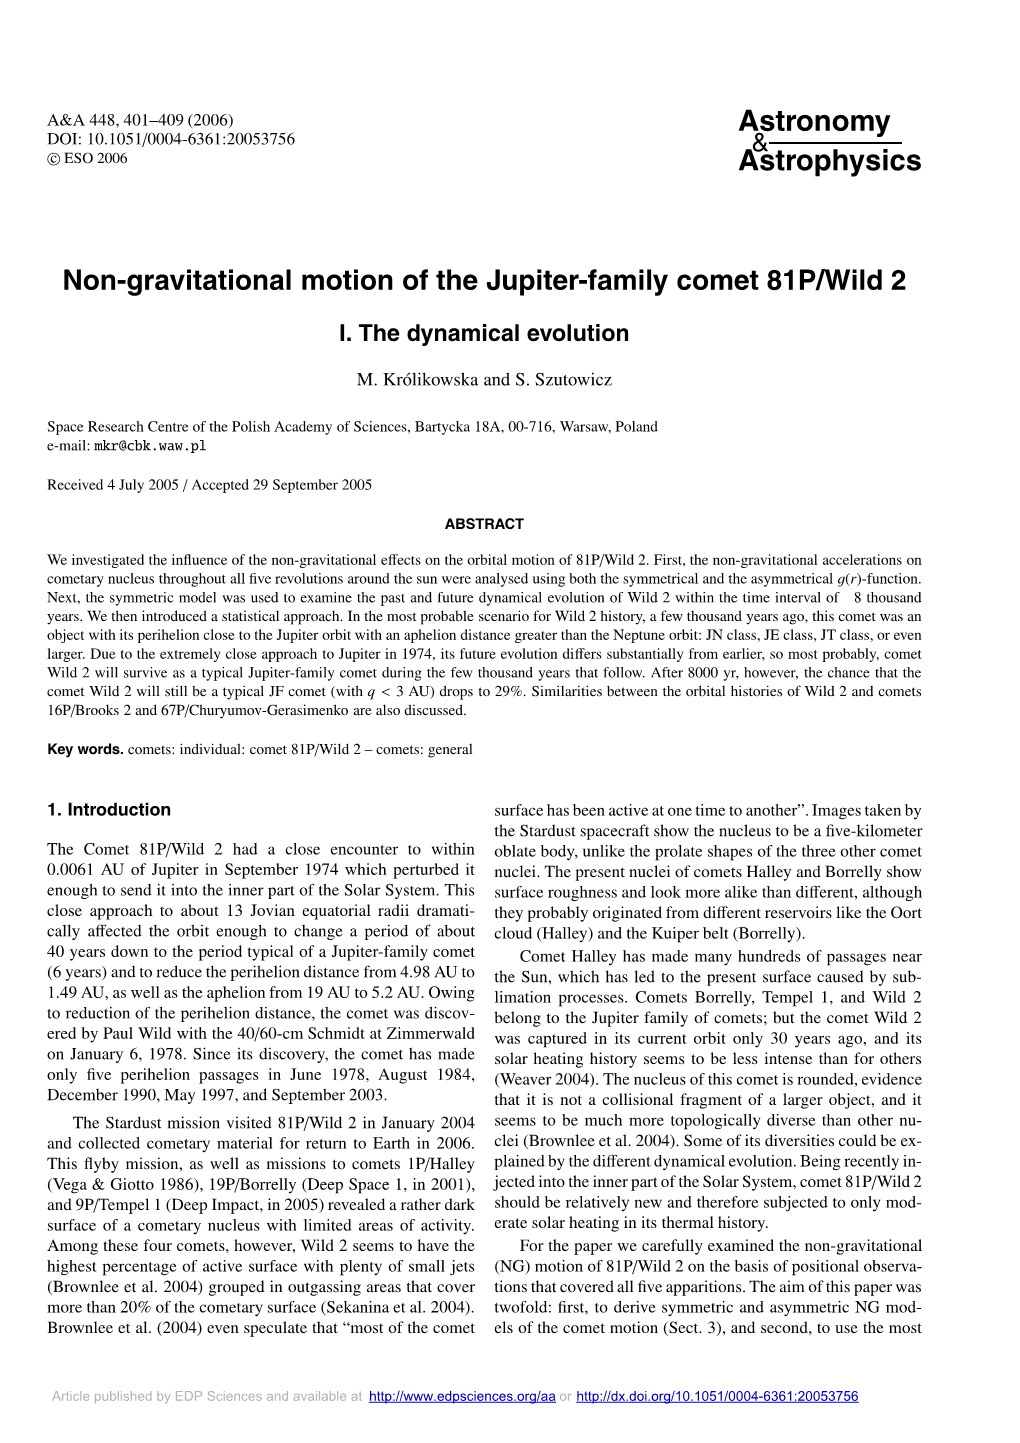 Non-Gravitational Motion of the Jupiter-Family Comet 81P/Wild 2